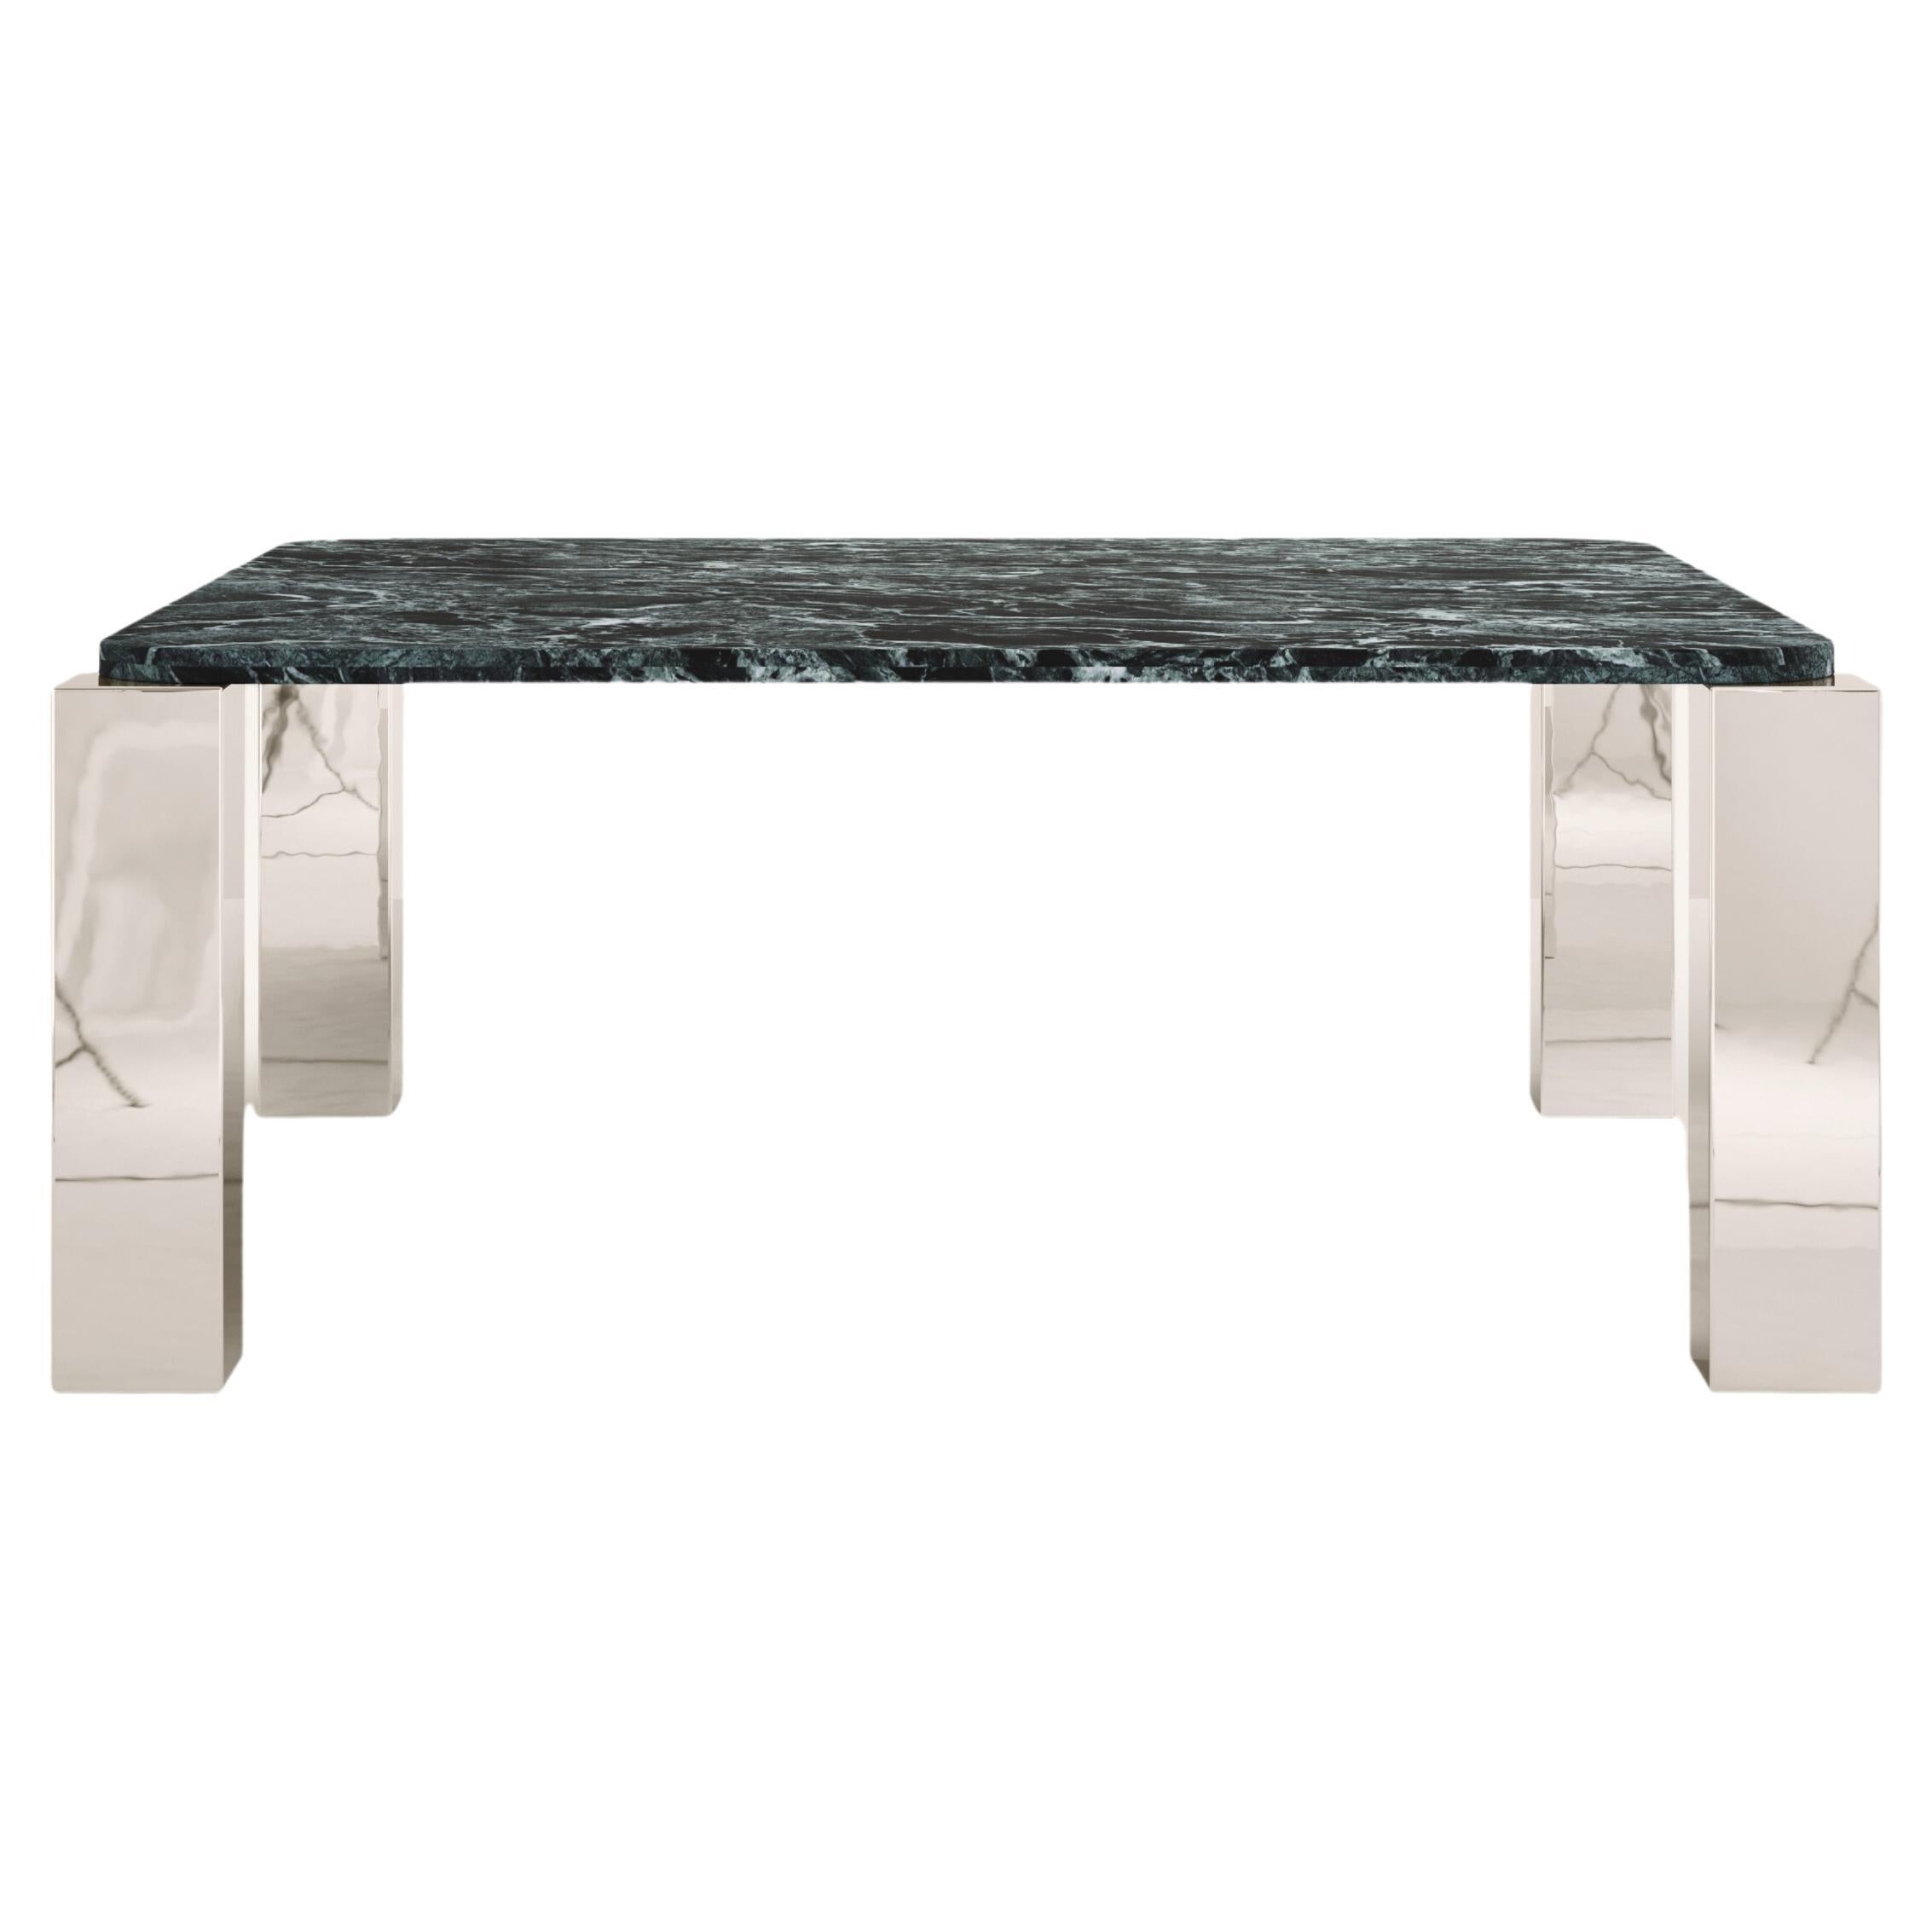 FORM(LA) Cubo Square Dining Table 74”L x 74”W x 30”H Verde Alpi Marble & Chrome